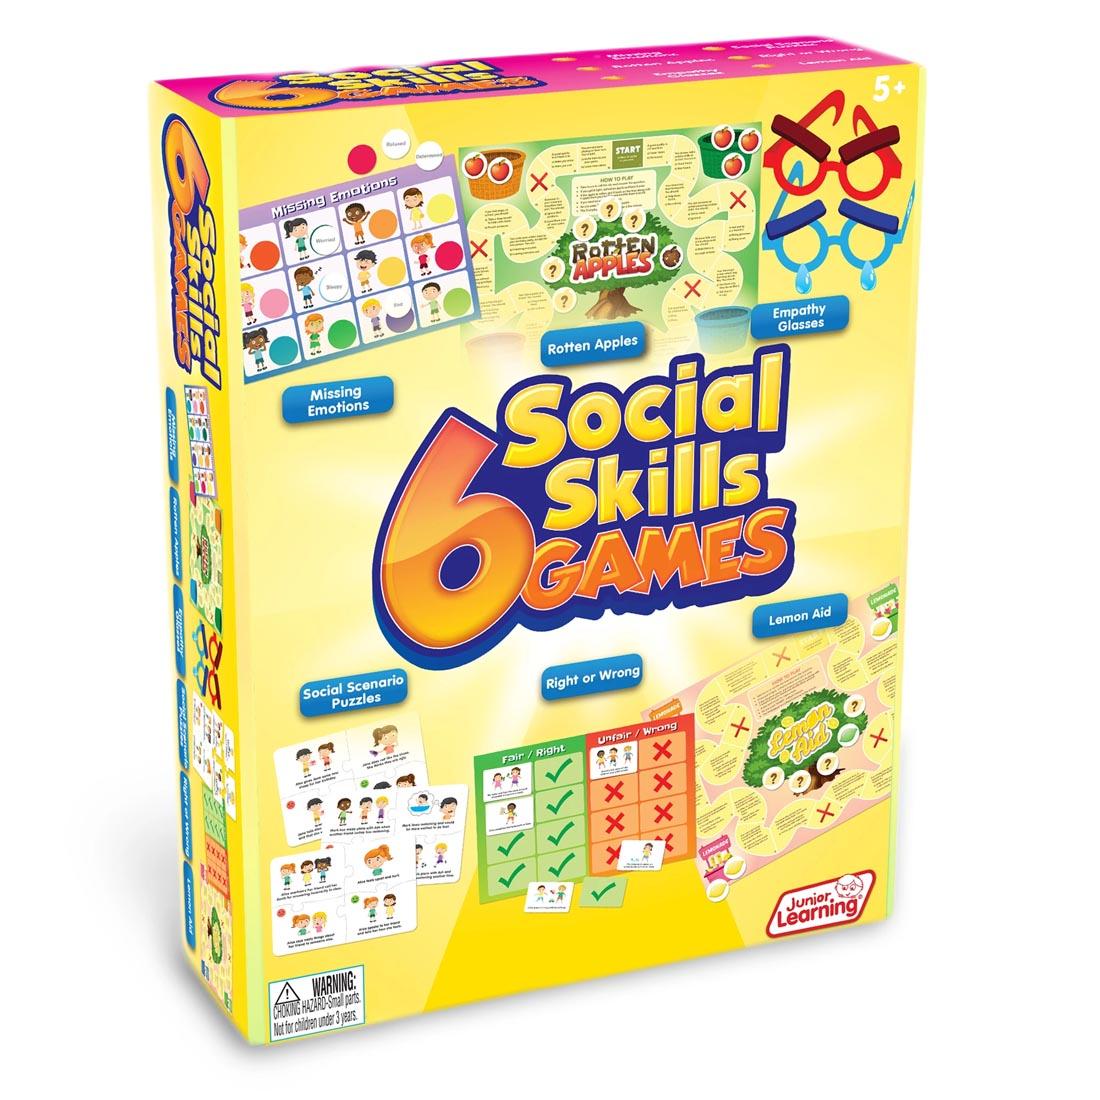 6 Social Skills Games by Junior Learning